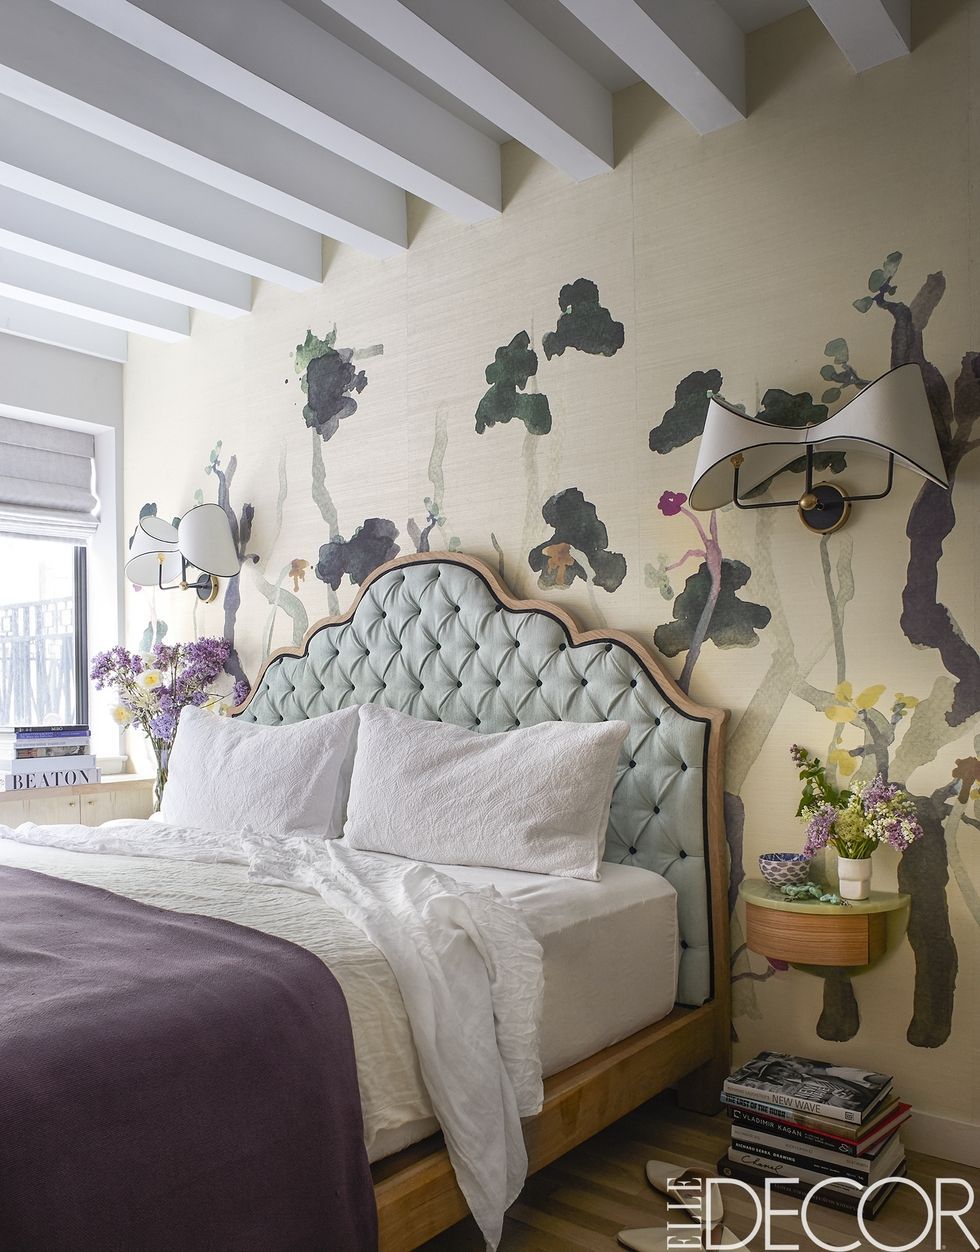 wallpaper for bedroom walls designs,bedroom,room,bed,furniture,wall